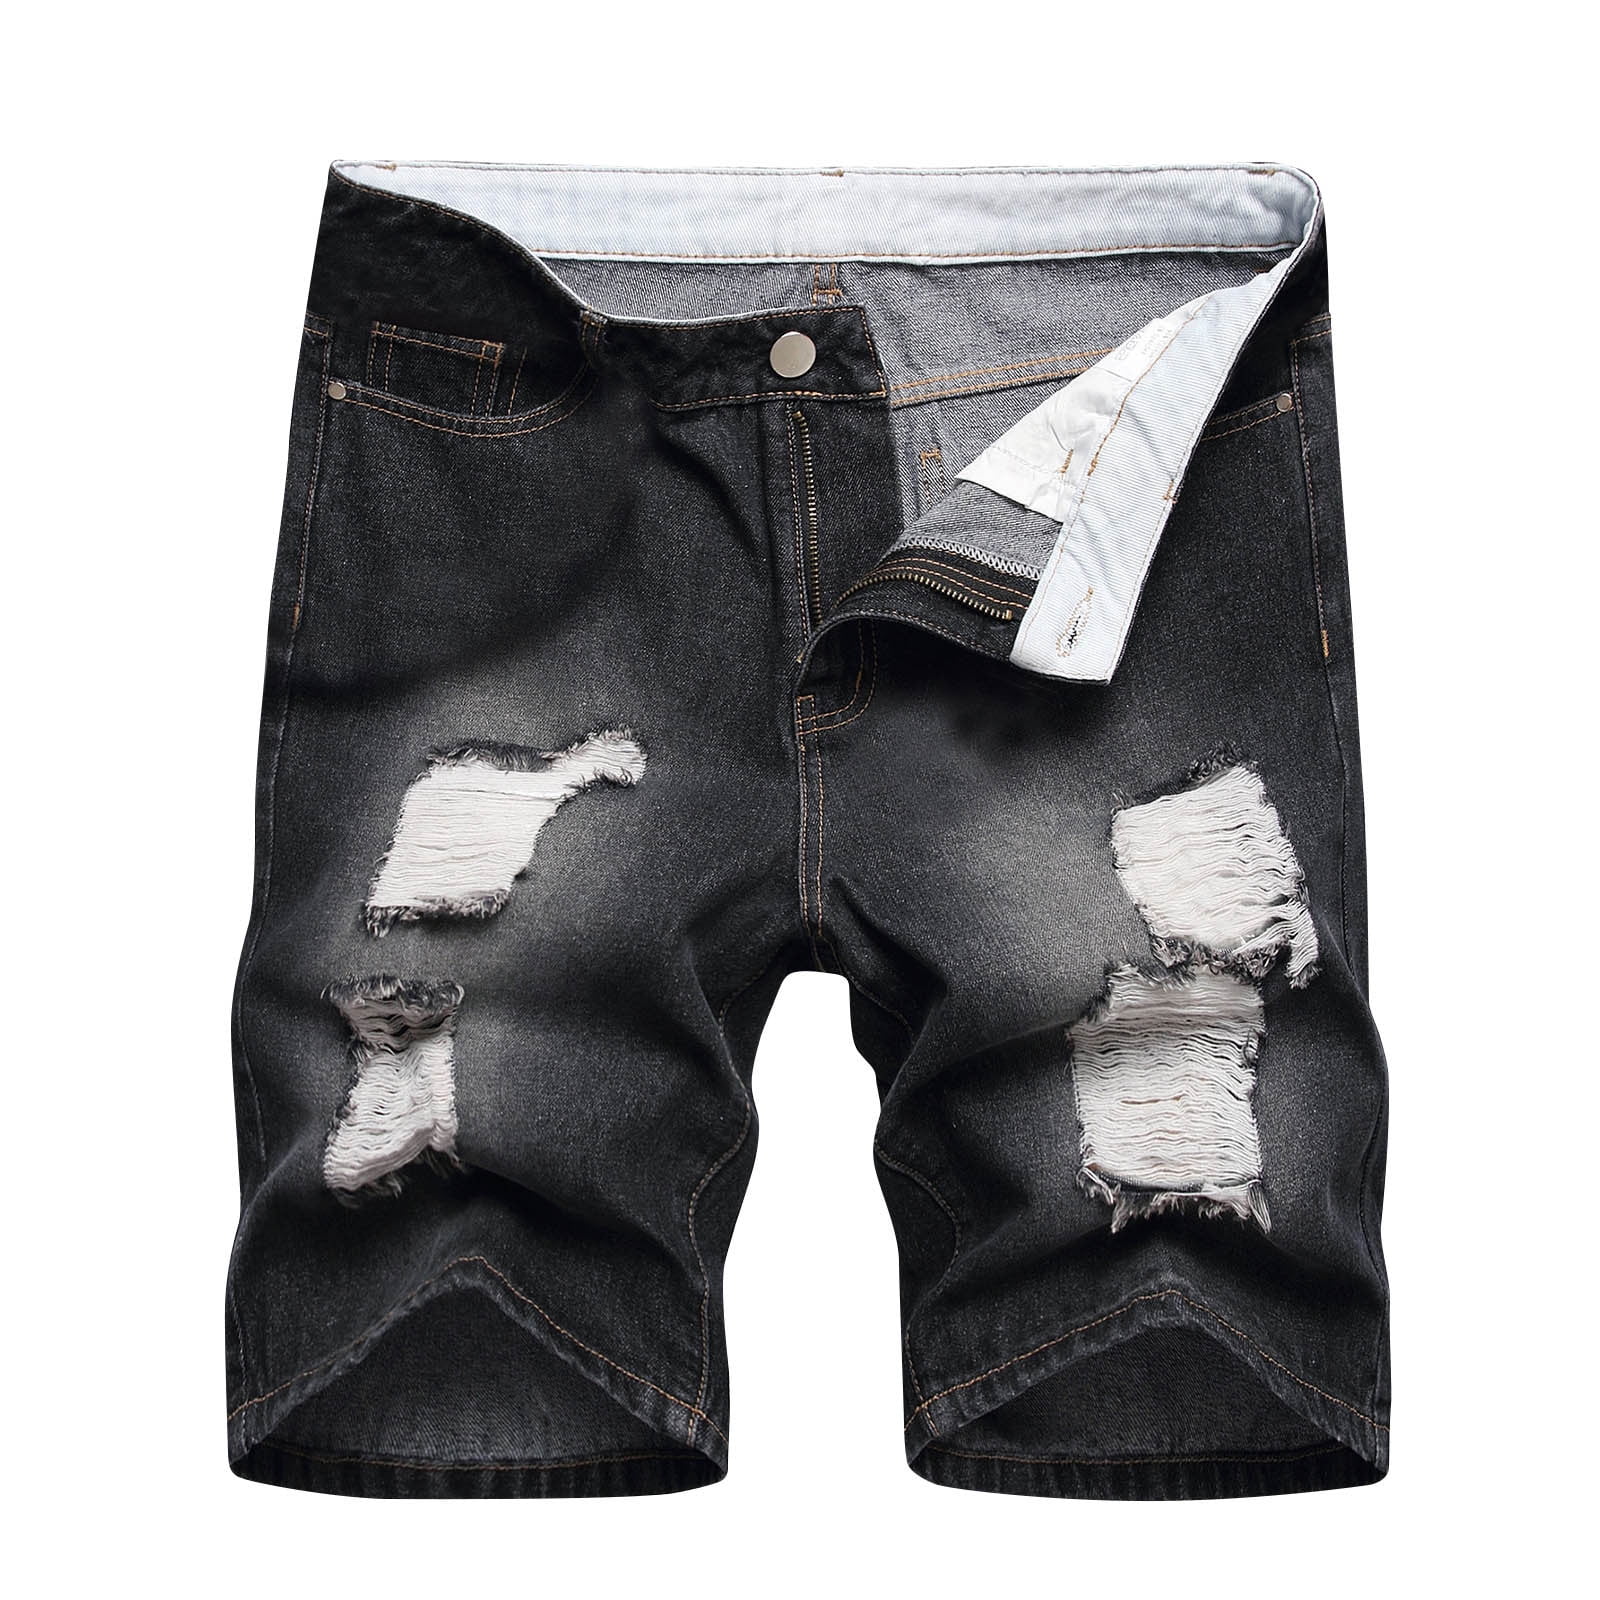 ELFINDEA Shorts Men's Jeans Shorts Ripped Distressed Denim Shorts